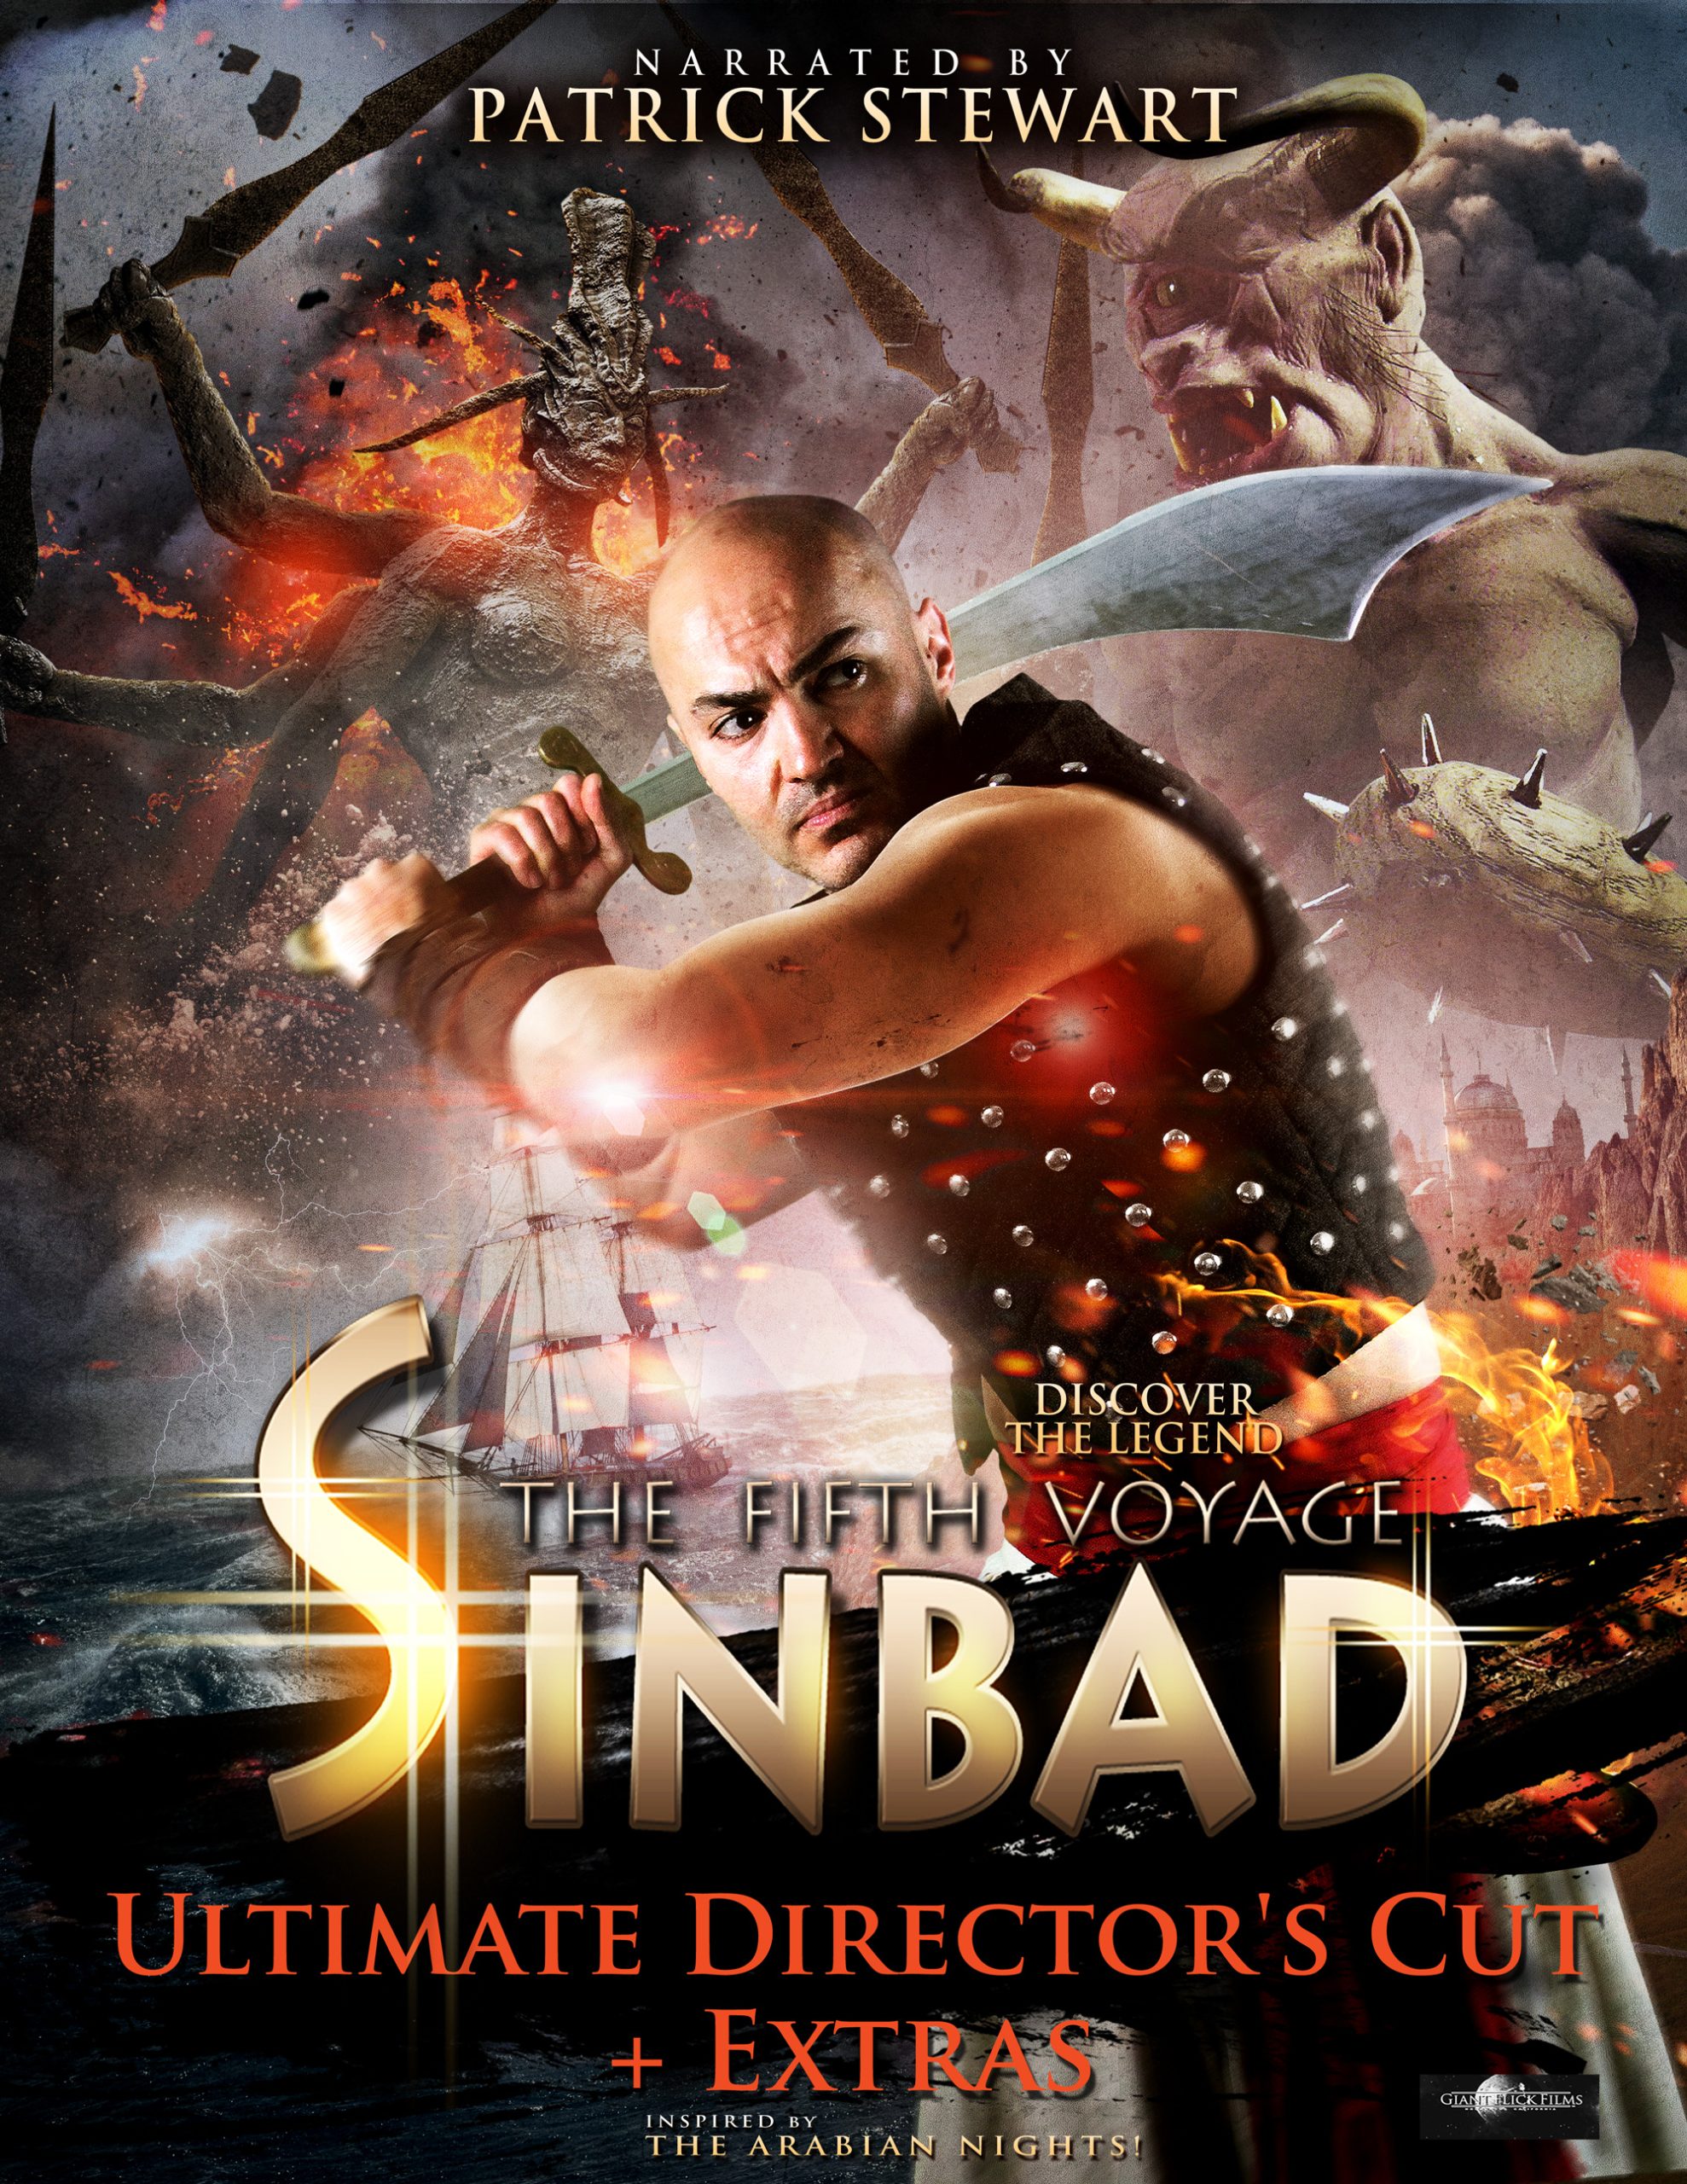 Sinbad The Fifth Voyage (2014) ซินแบด พิชิตศึกสุดขอบฟ้า Patrick Stewart